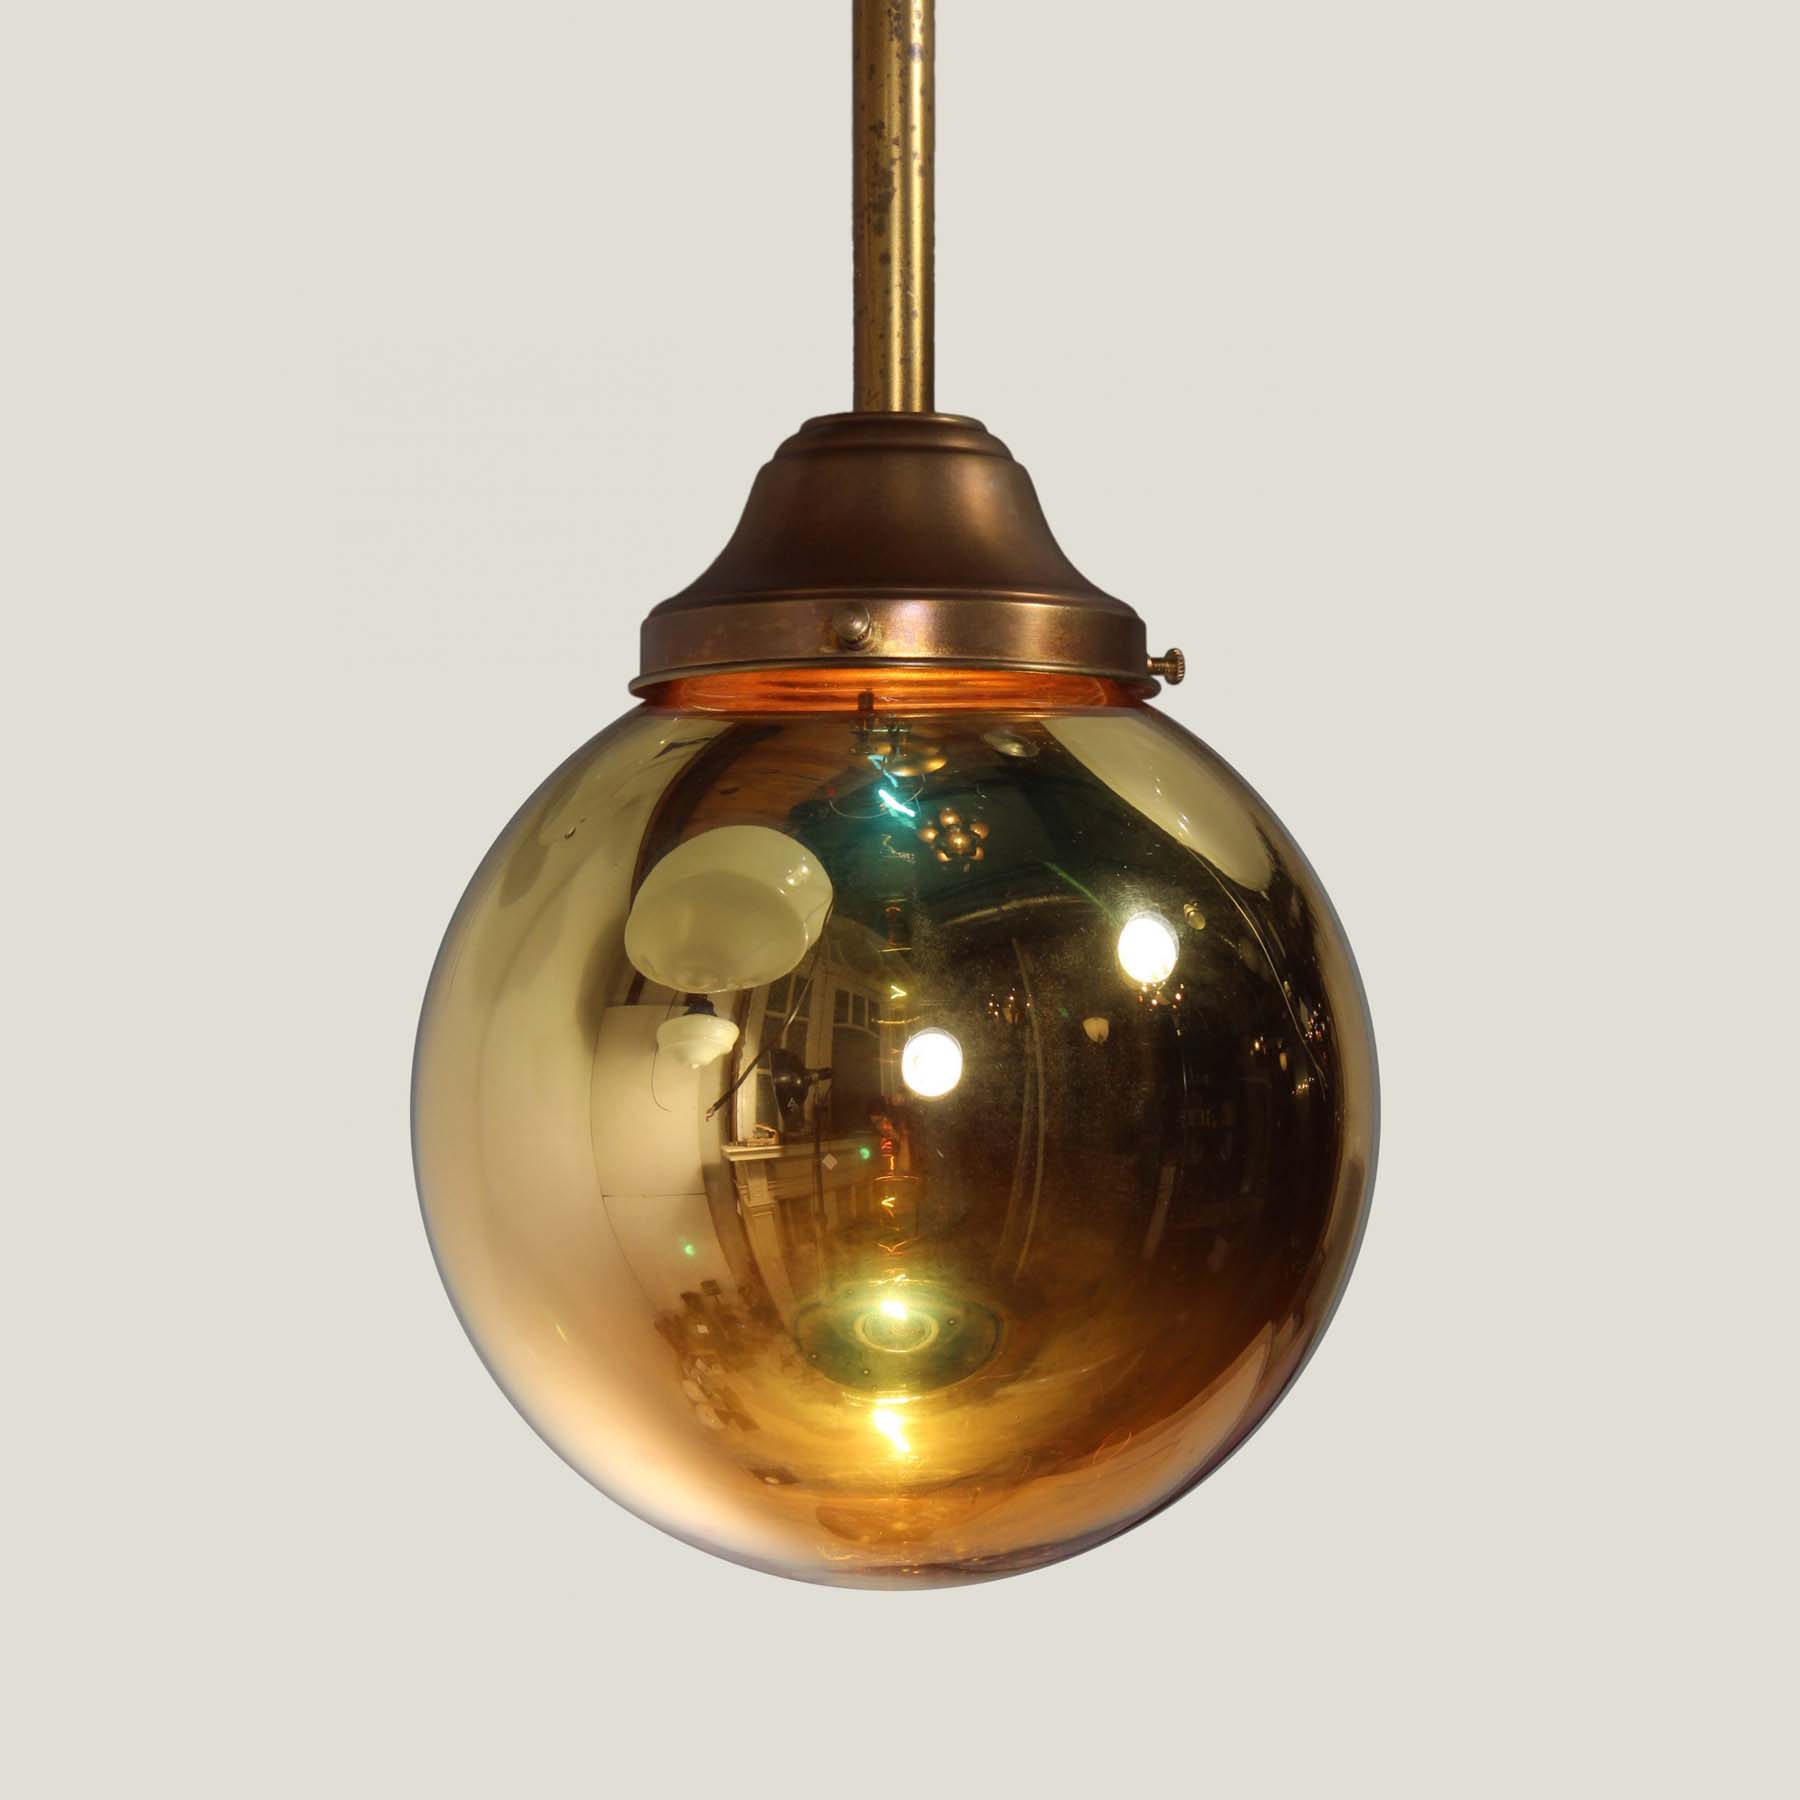 SOLD Mirrored Glass Ball Pendant Lights, Vintage Lighting-69598